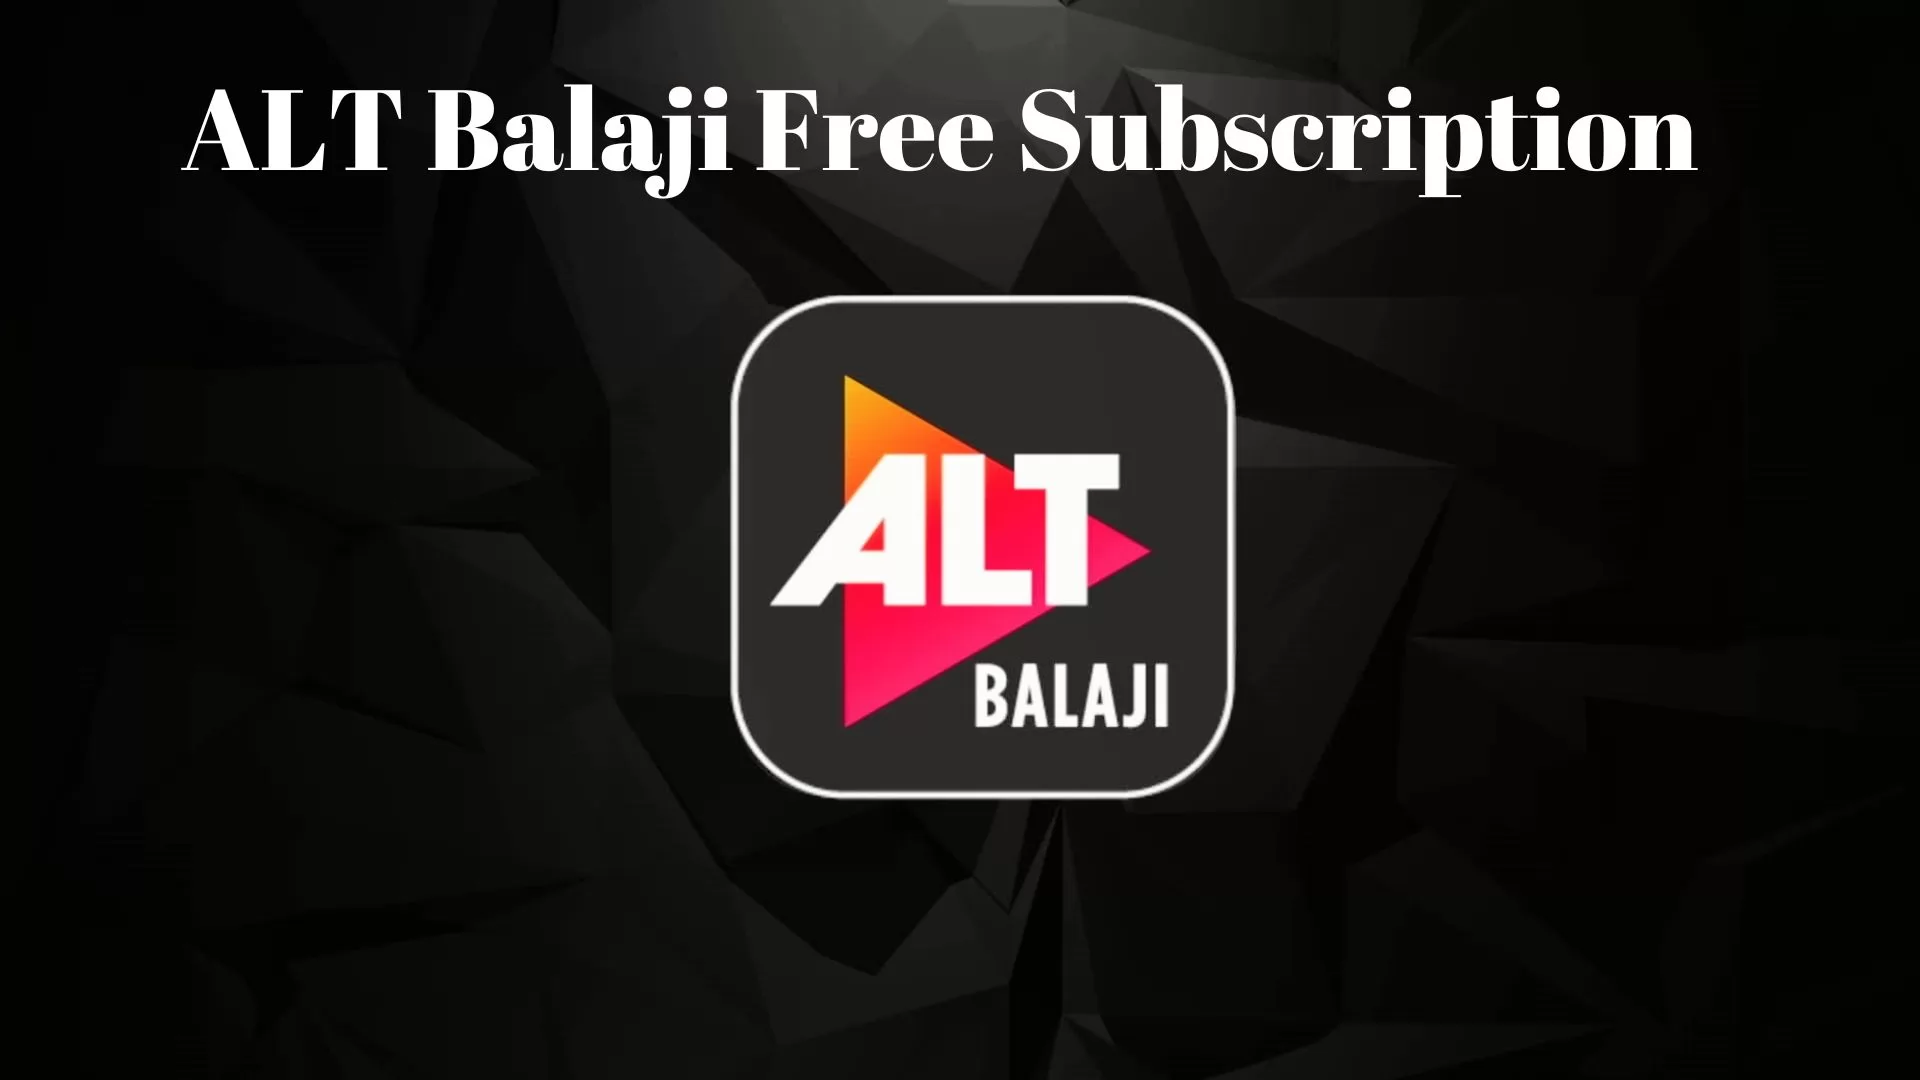 ALT Balaji Free Subscription